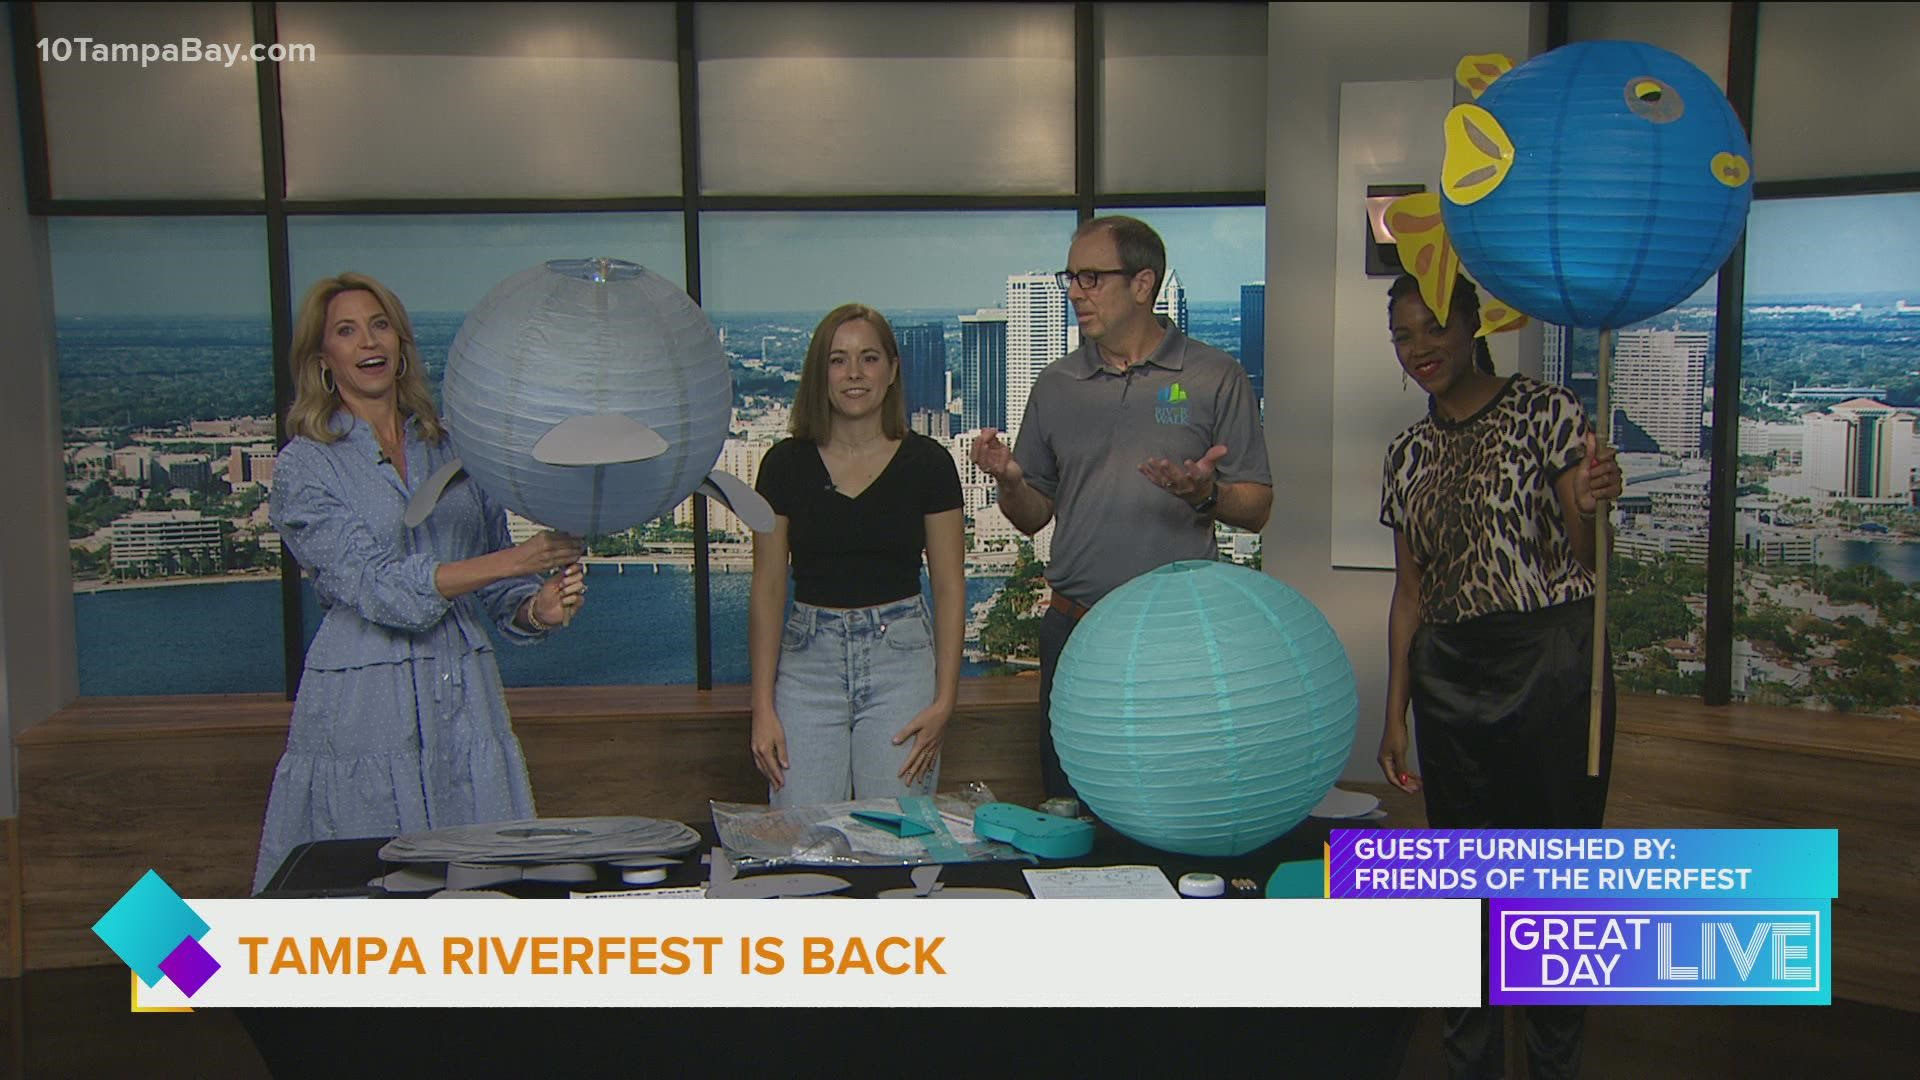 Tampa Riverfest is back!